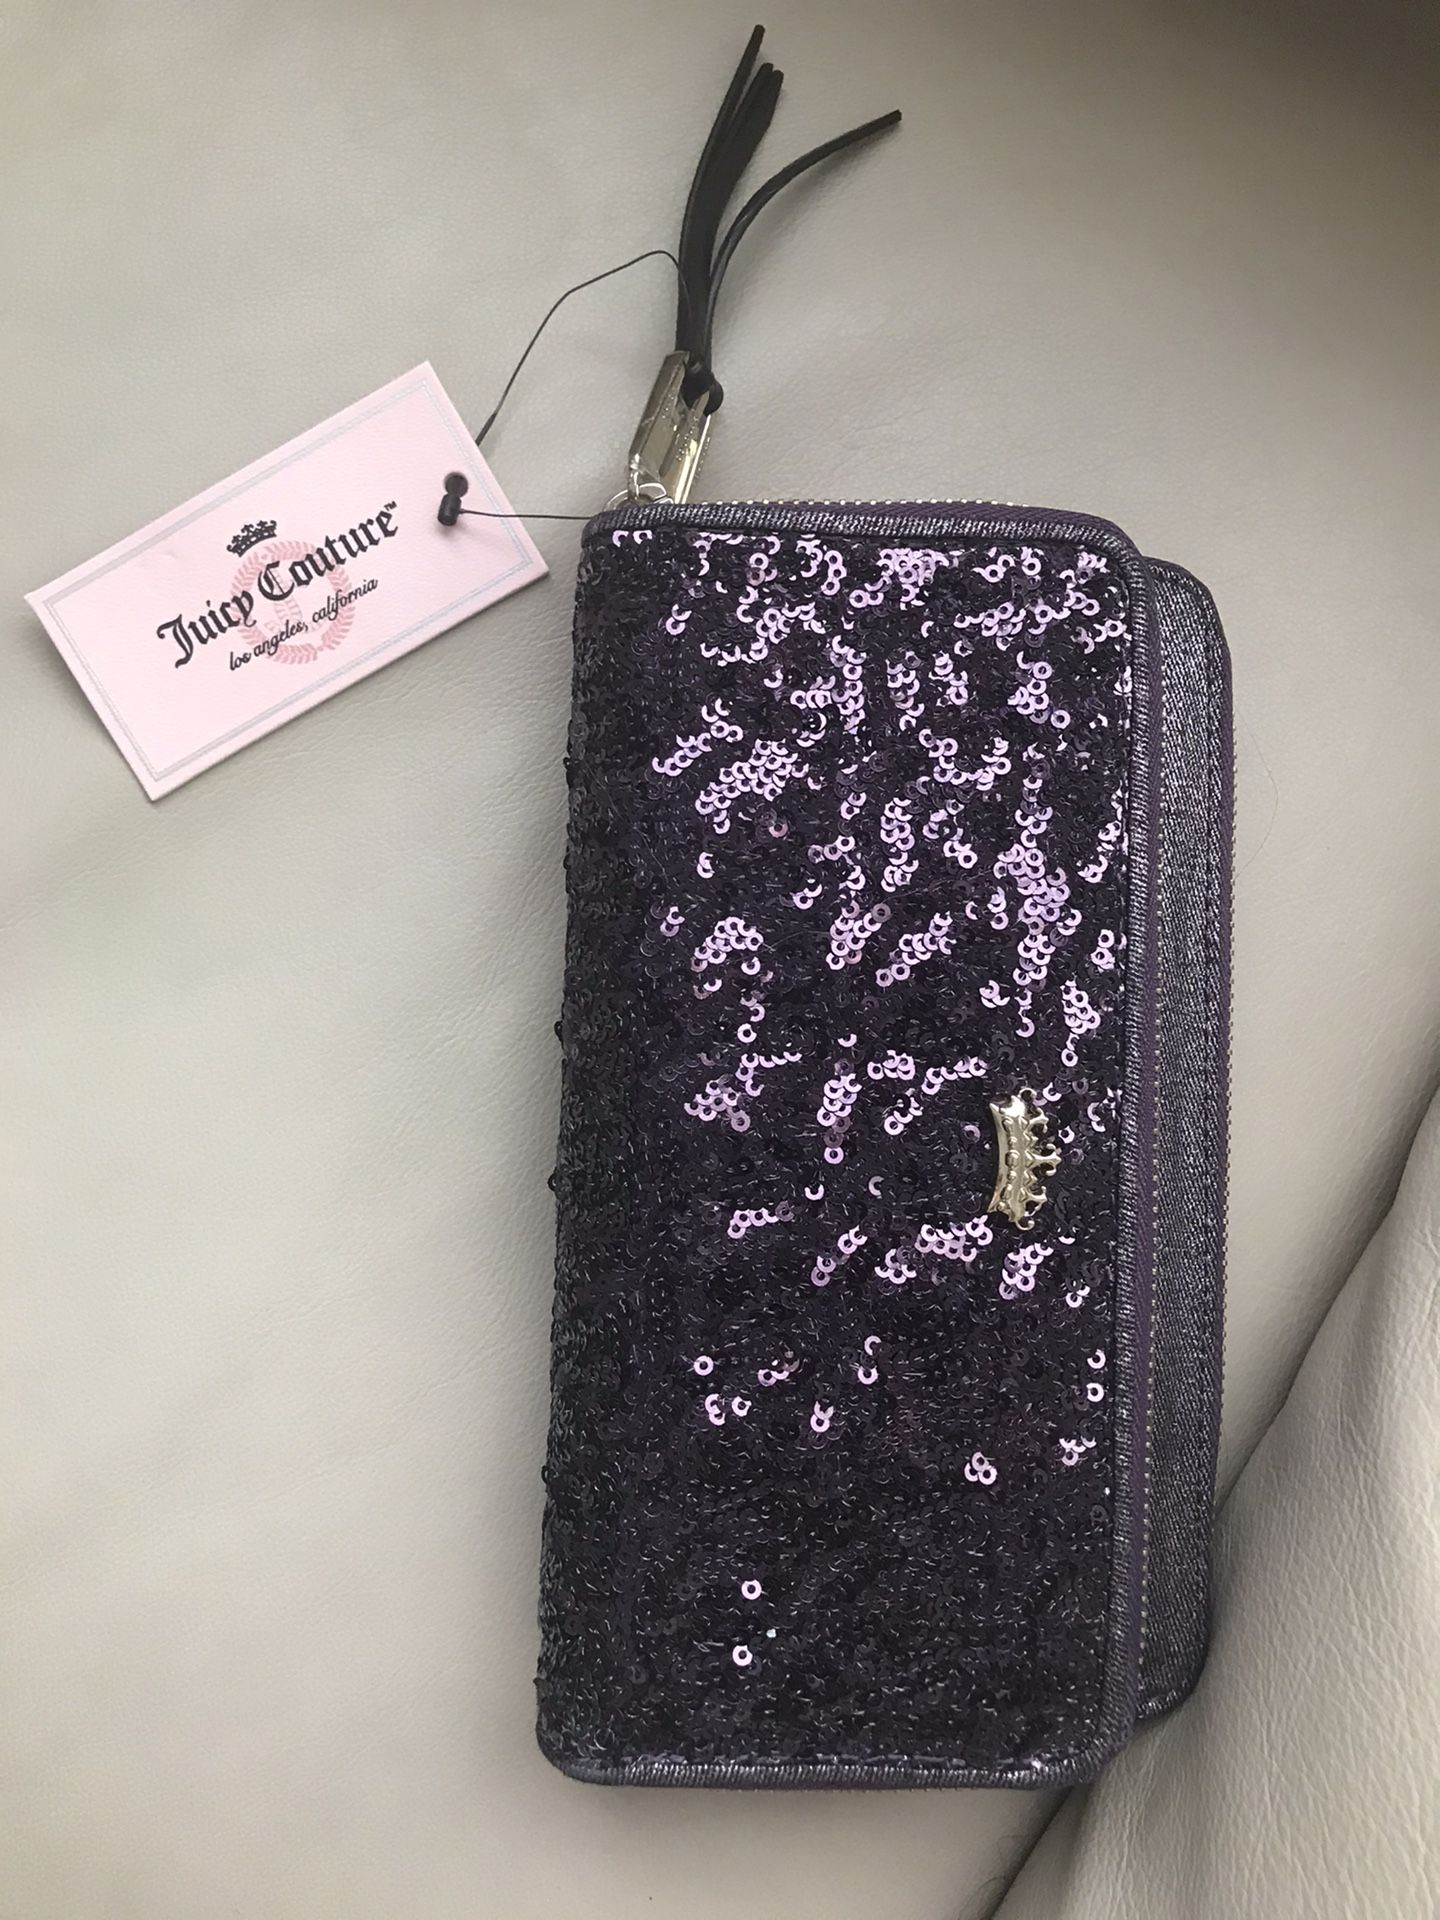 Juicy Couture Purple Wallet